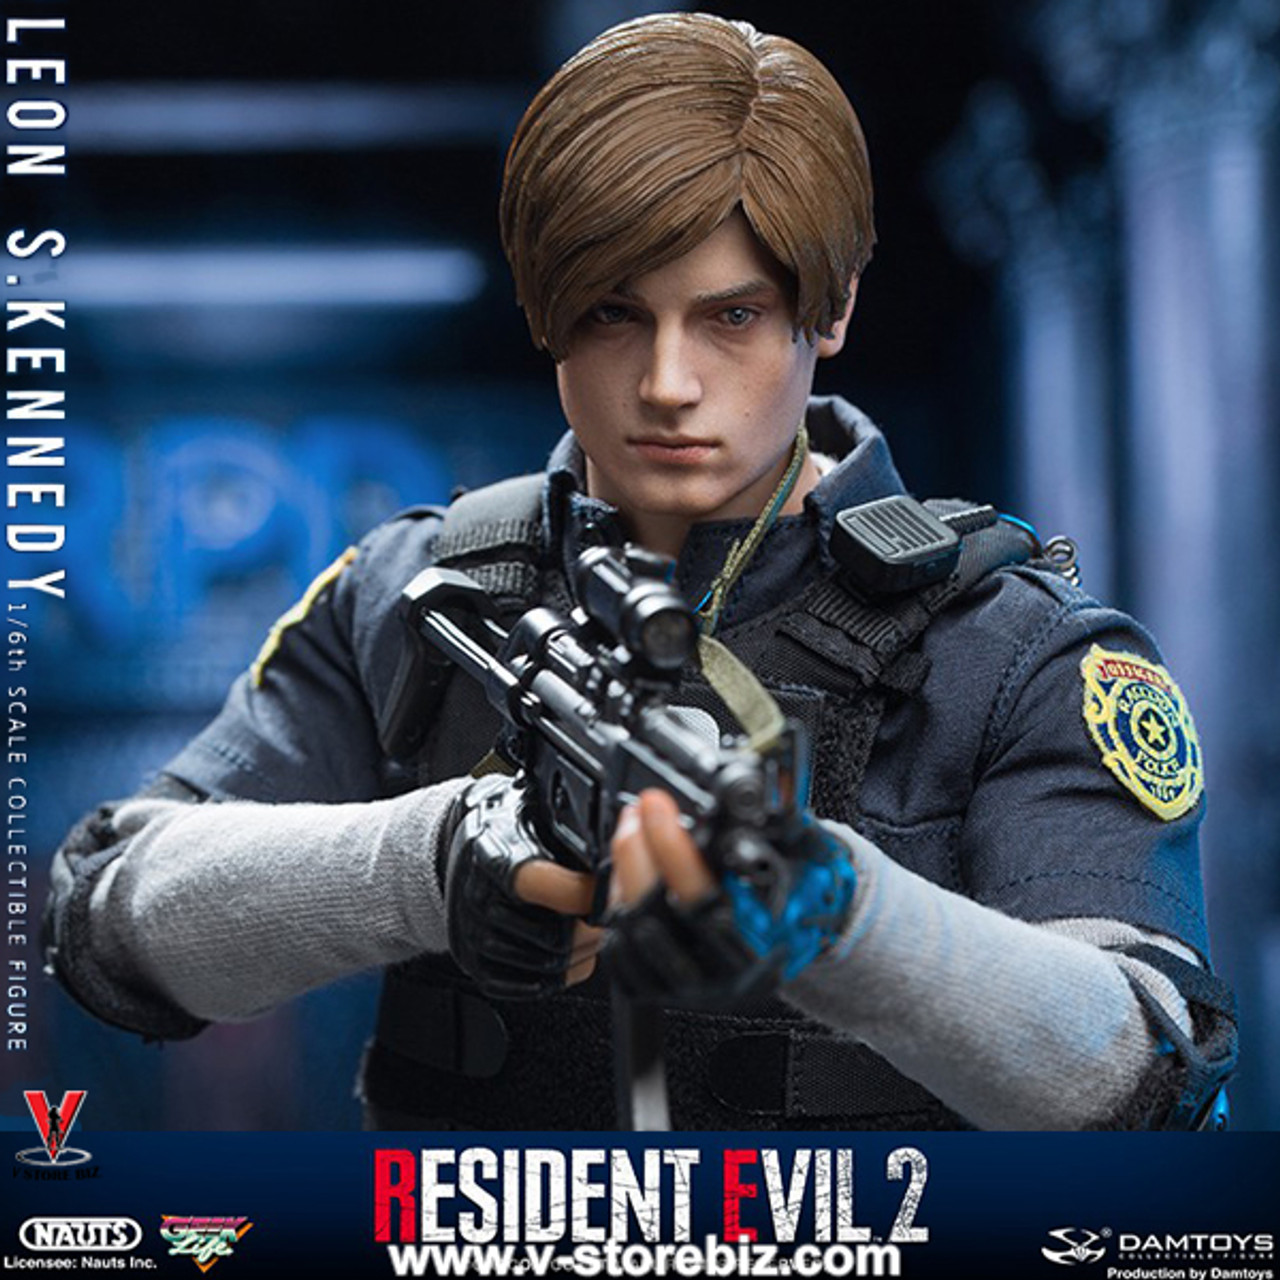 Figura - Leon S. Kennedy Resident Evil 2 Damtoys Nueva